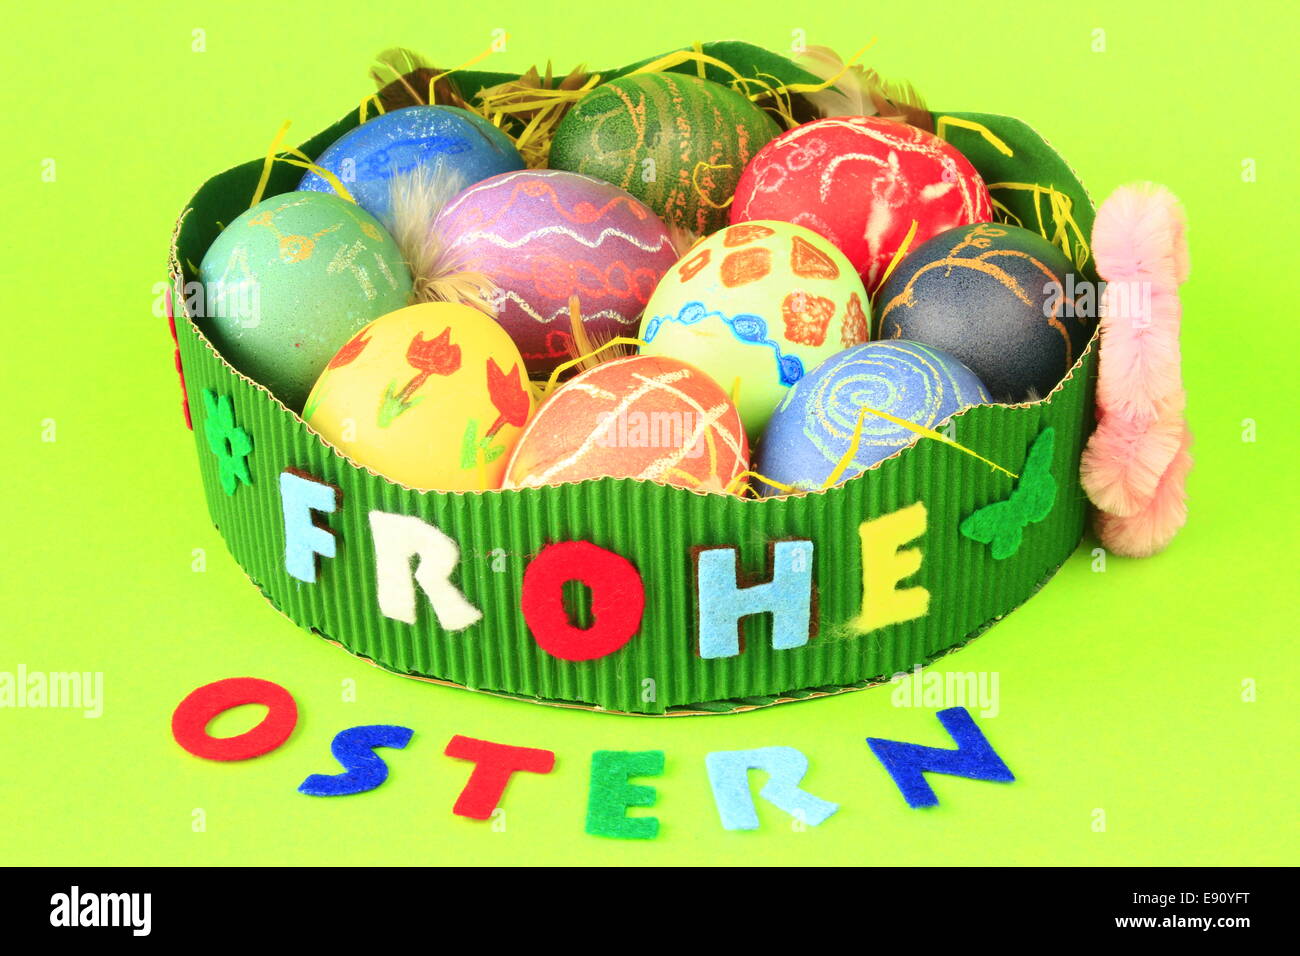 Easter customs Stock Photo